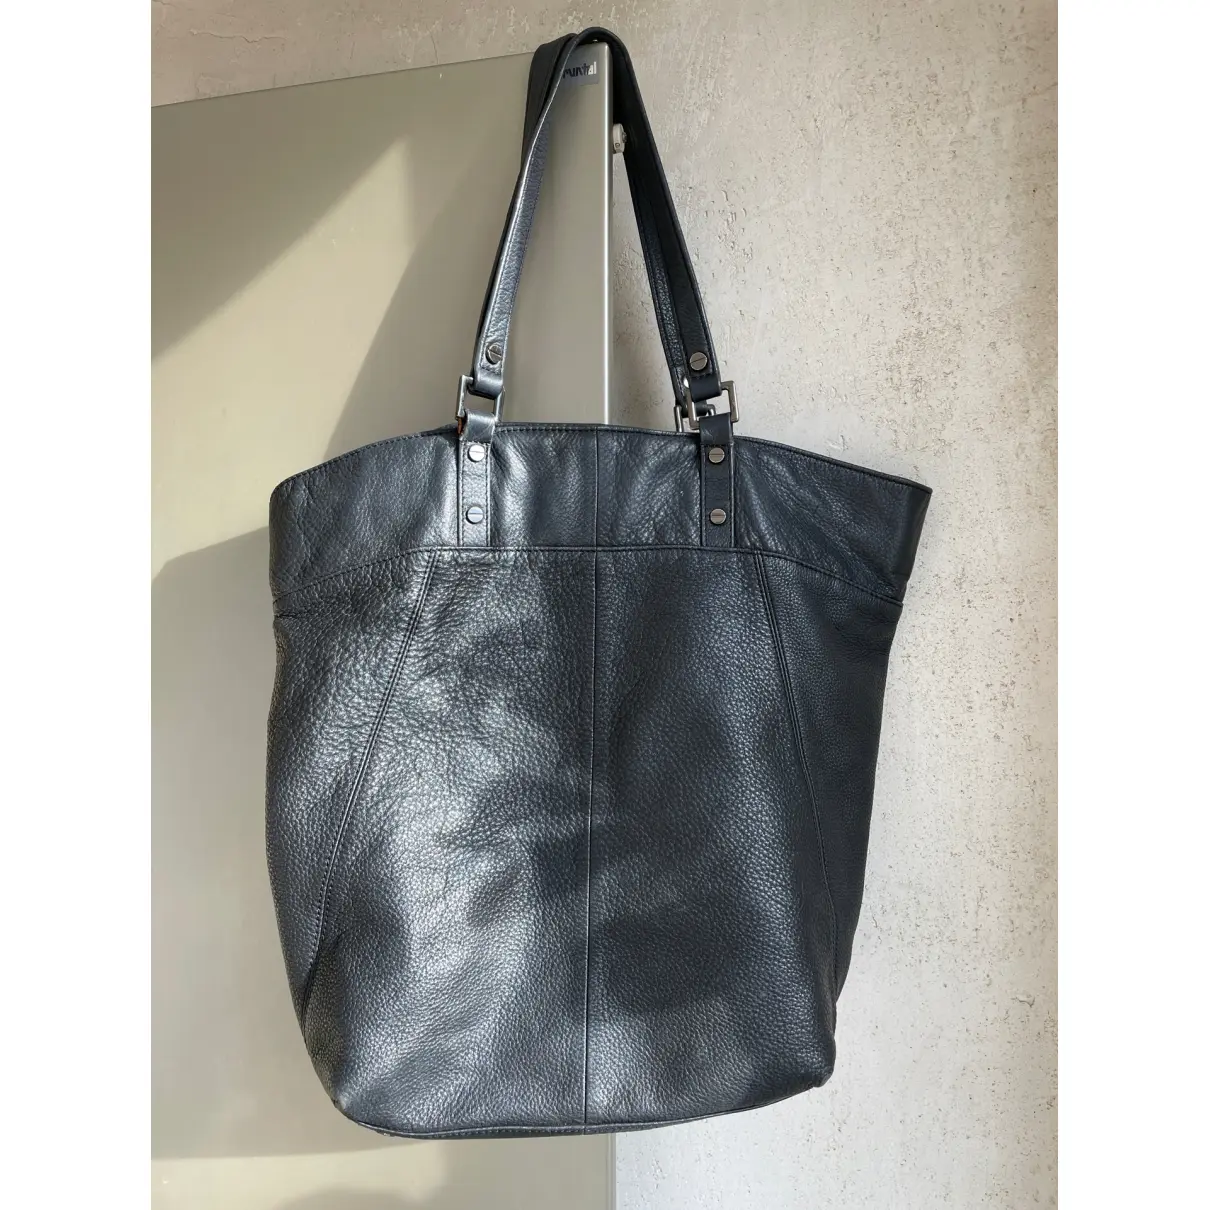 Buy Kenneth Cole Leather handbag online